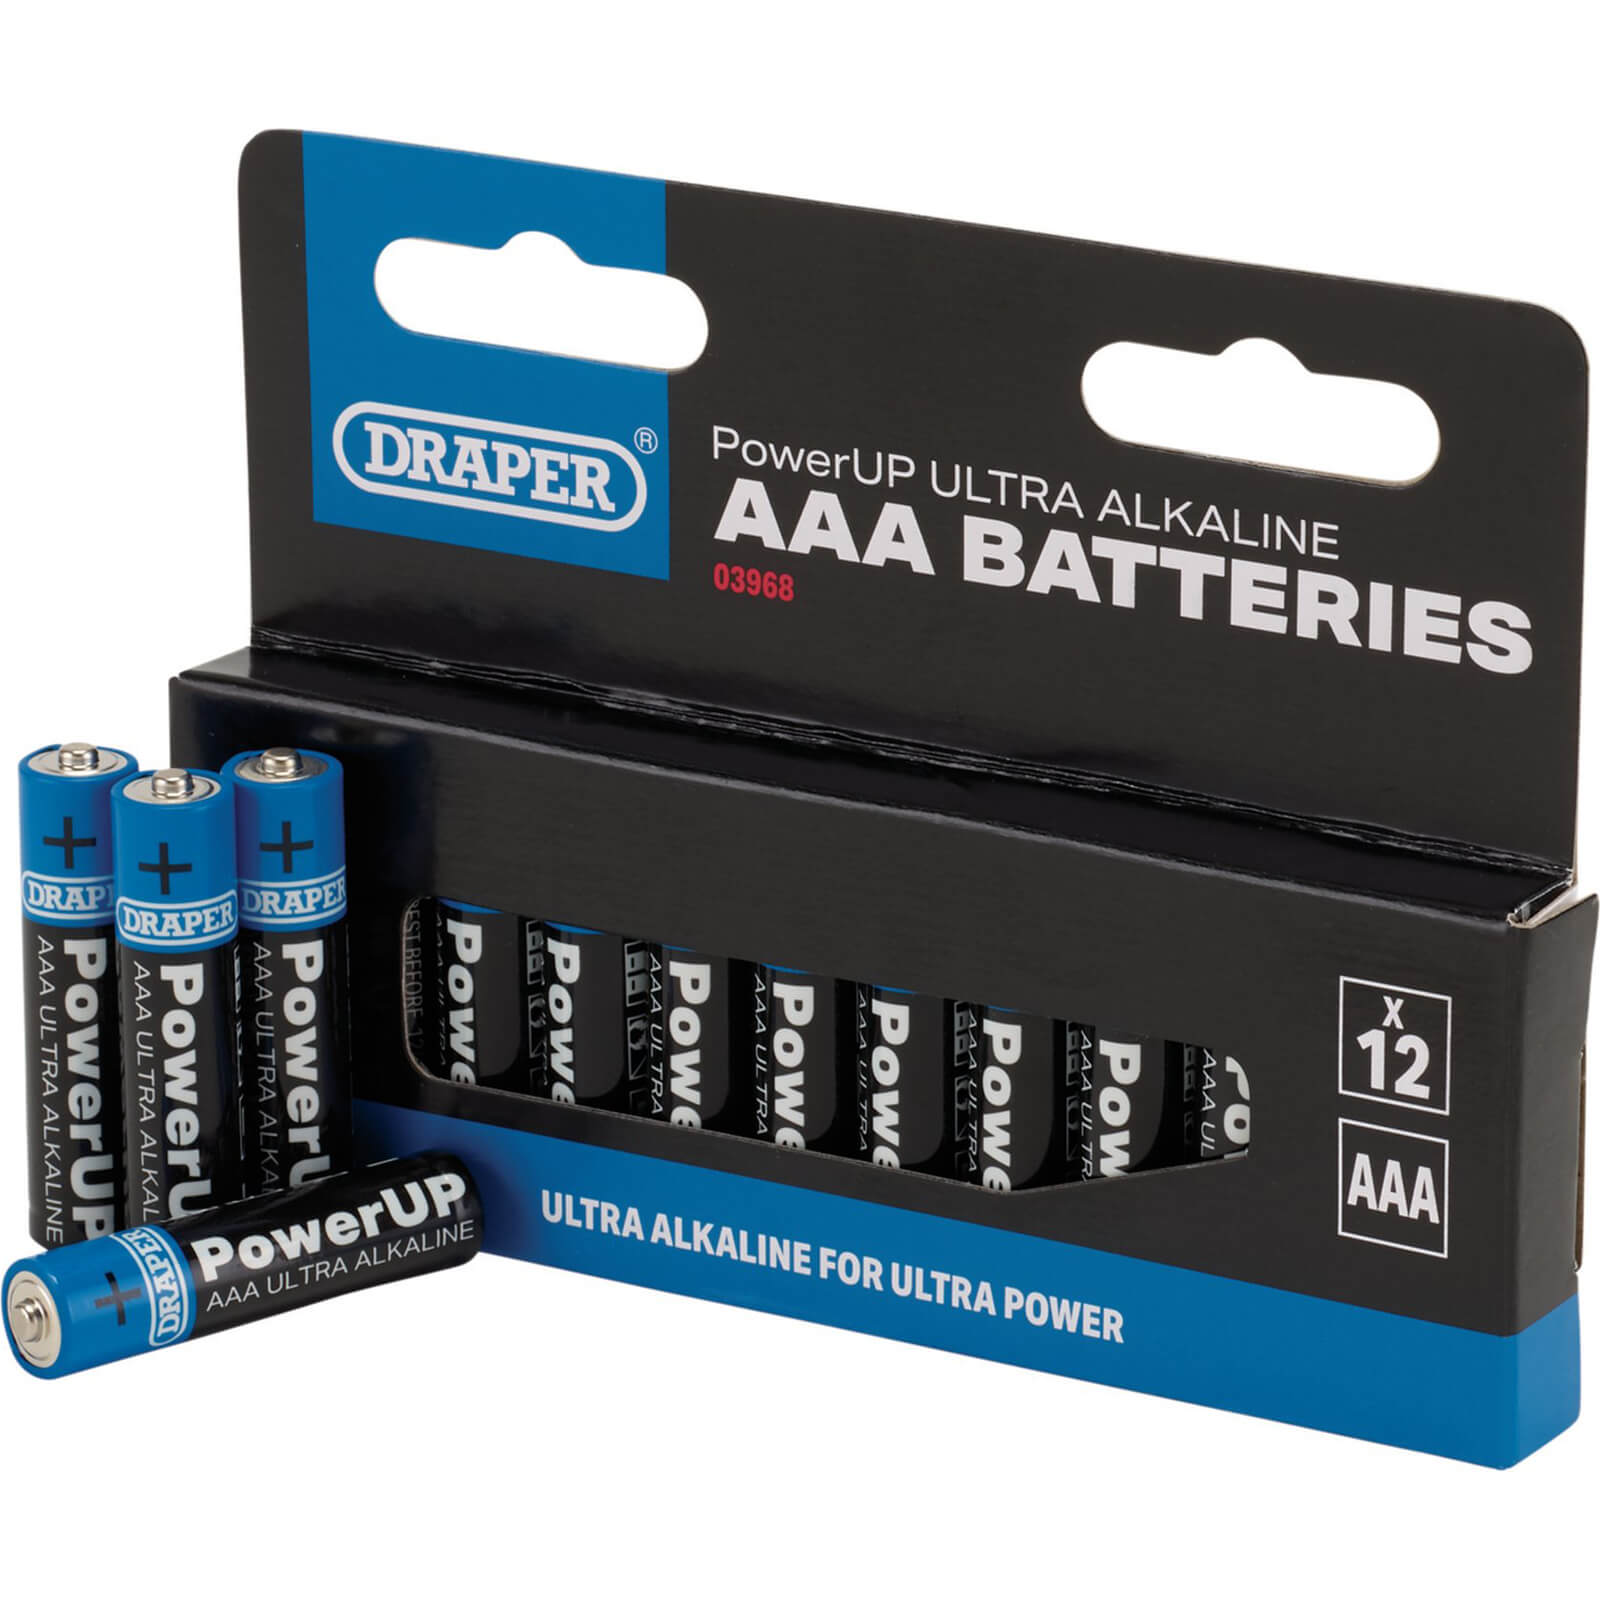 Image of Draper Powerup Ultra Alkaline AAA Batteries Pack of 12